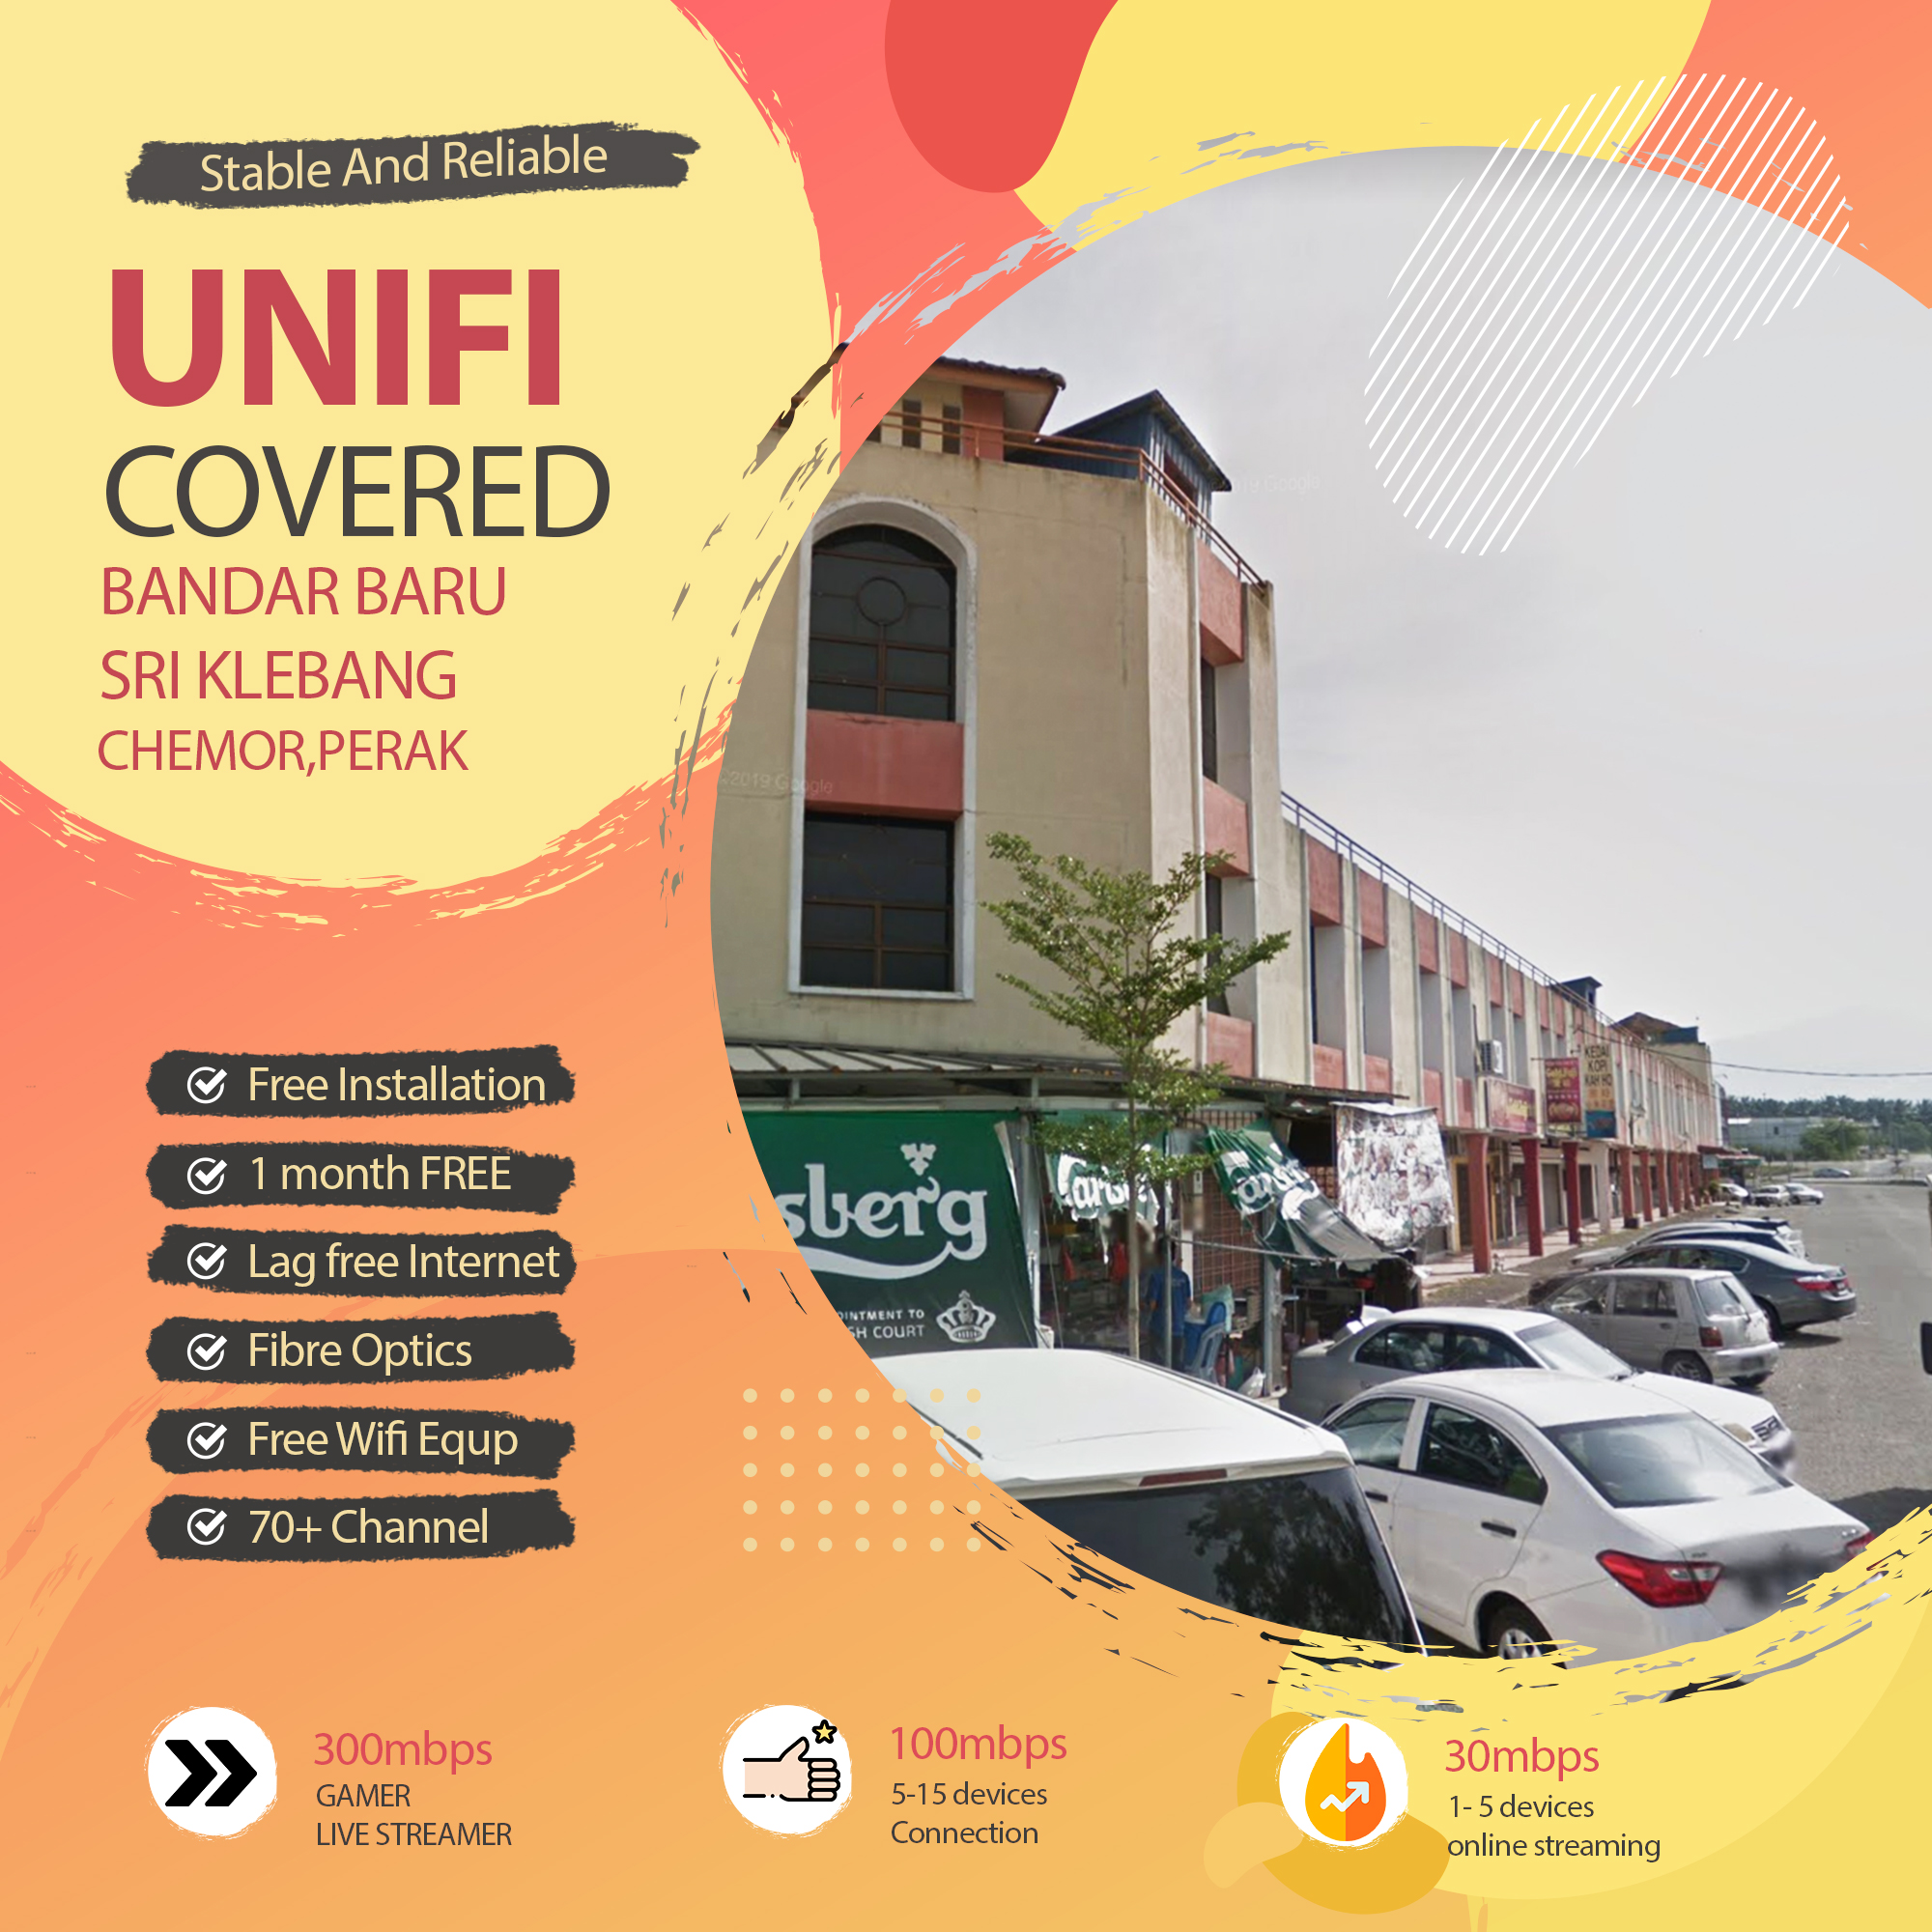 unifi Chemor Coverage – unifi Cover Bandar Baru Sri Klebang,Perak With Hispeed Broadband